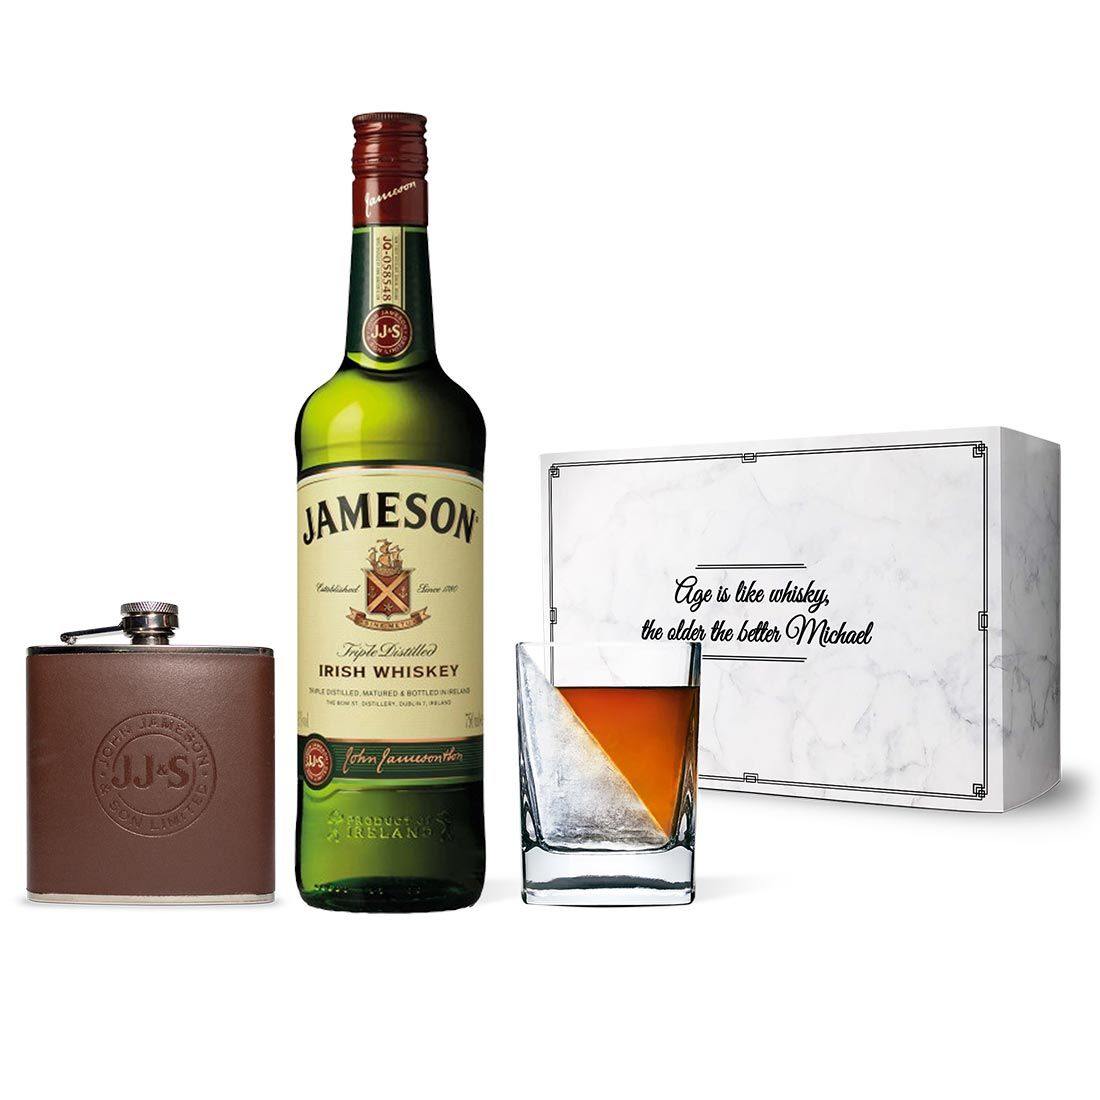 Jameson отзывы. Ящик виски Jameson. Торты в виде виски Jameson. Jameson виски со стаканами. Виски Jameson имбирь.